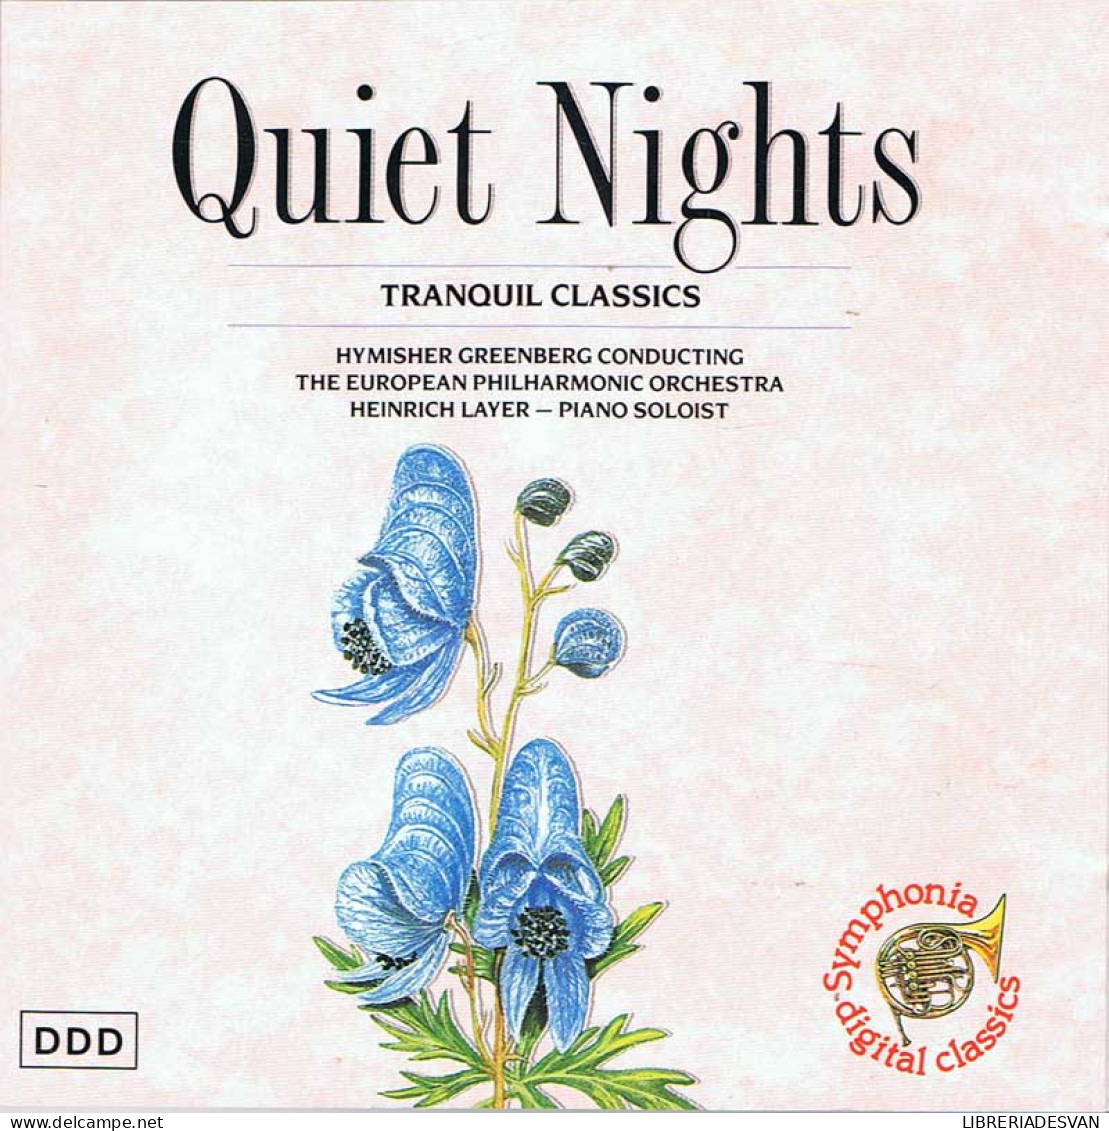 Quiet Nights - Tranquil Classics. CD - Classical